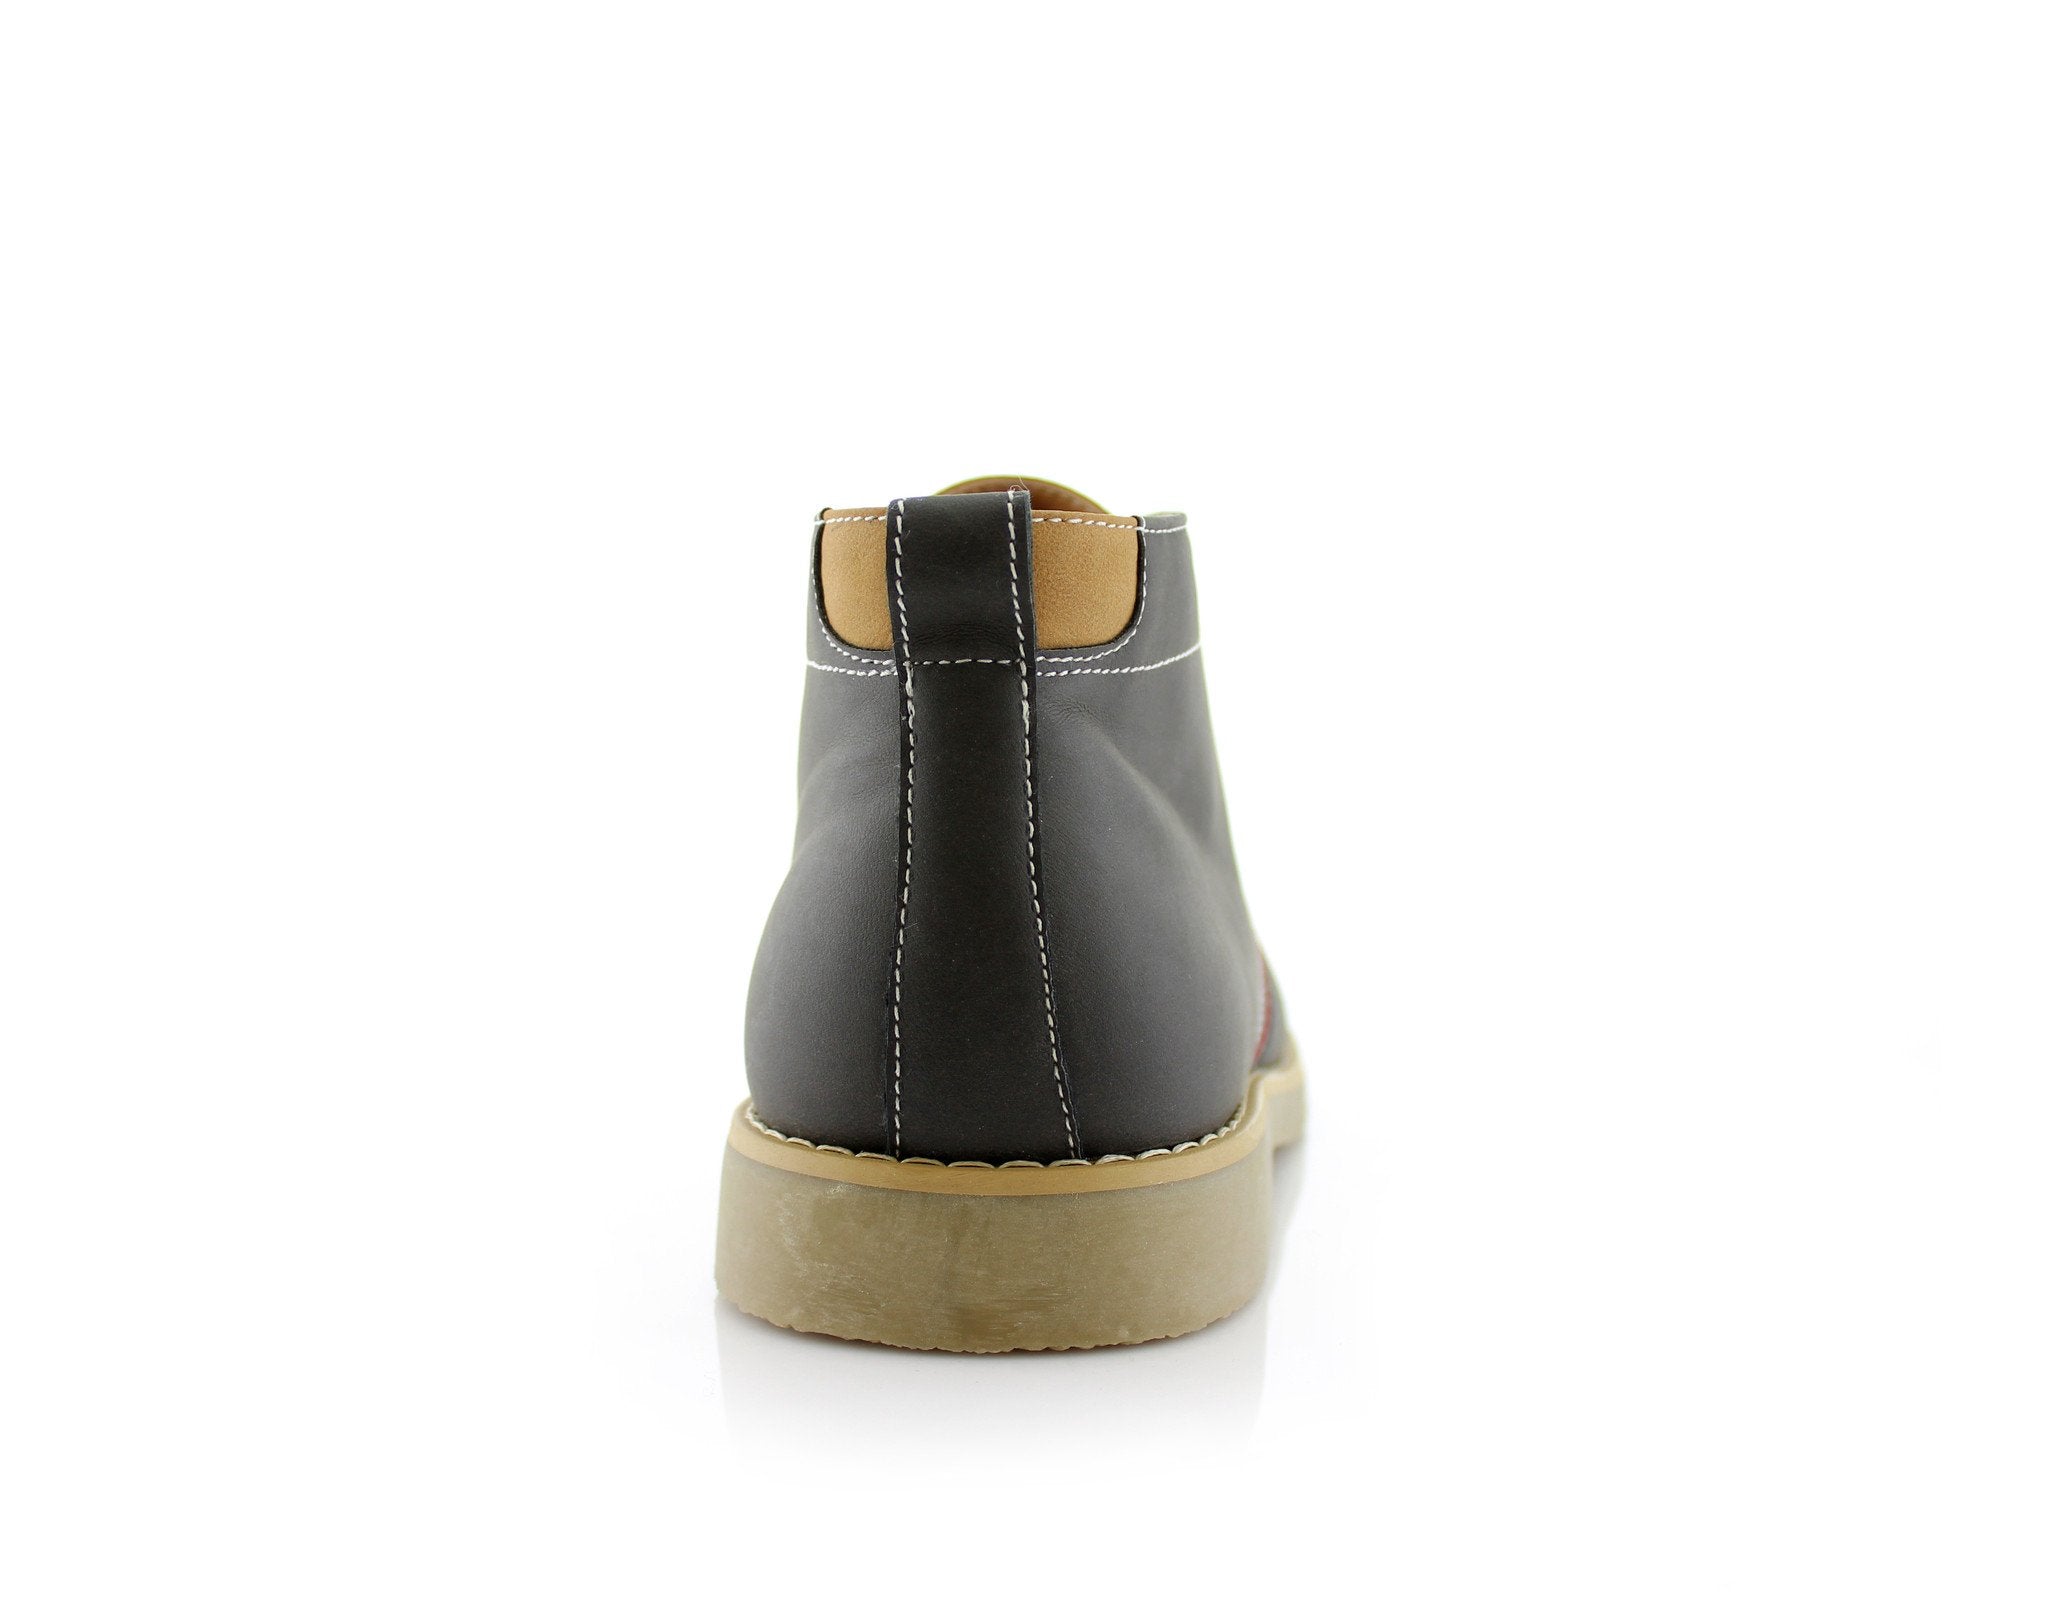 Classic Chukka Boots | Elliot by Polar Fox | Conal Footwear | Back Angle View